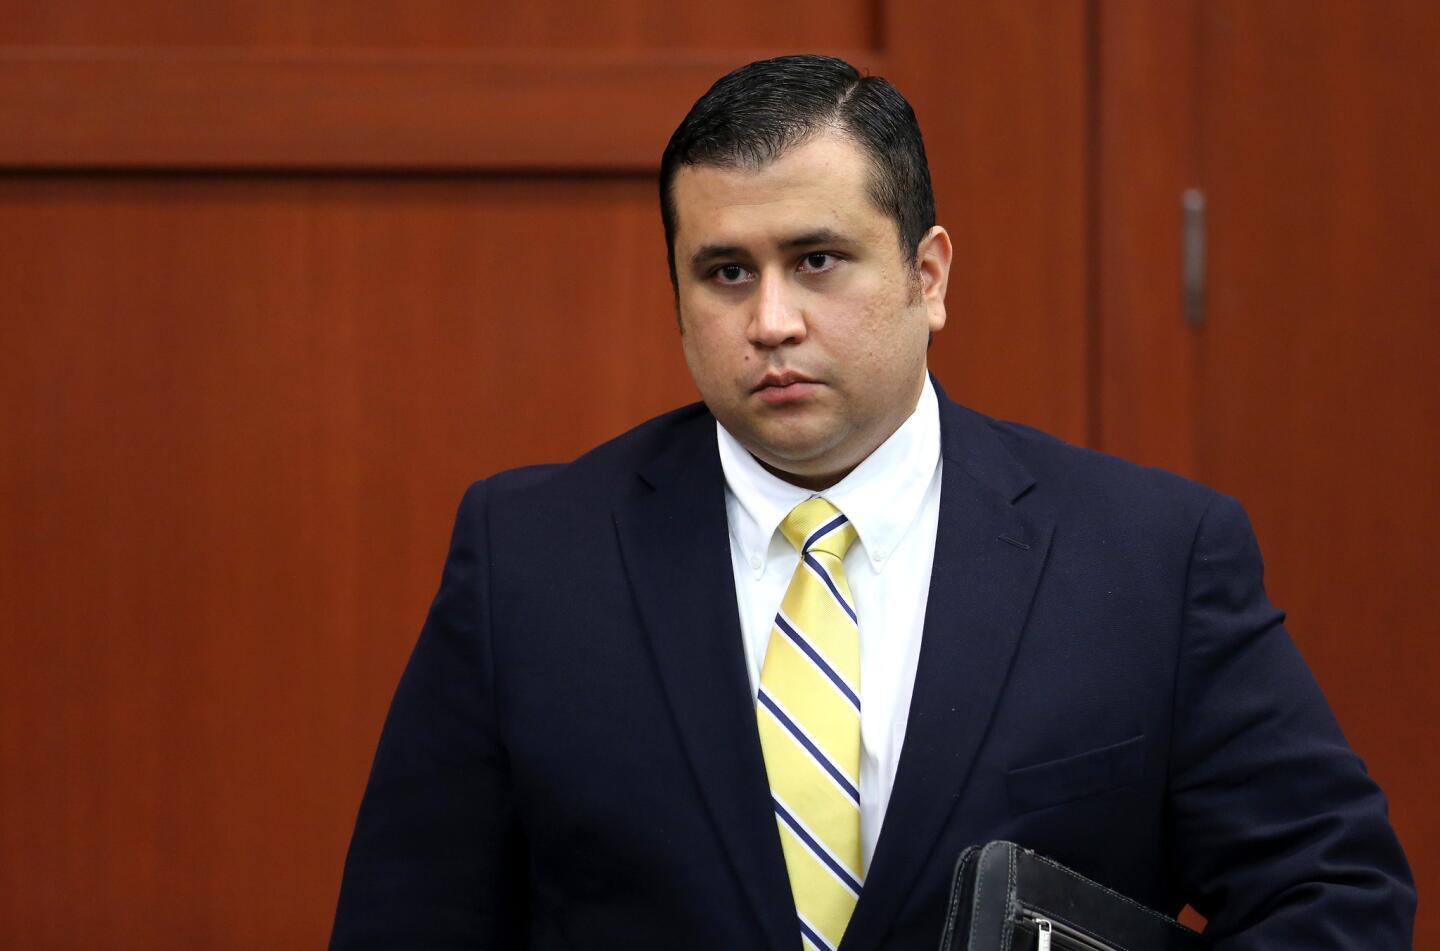 George Zimmerman Trial Day 15